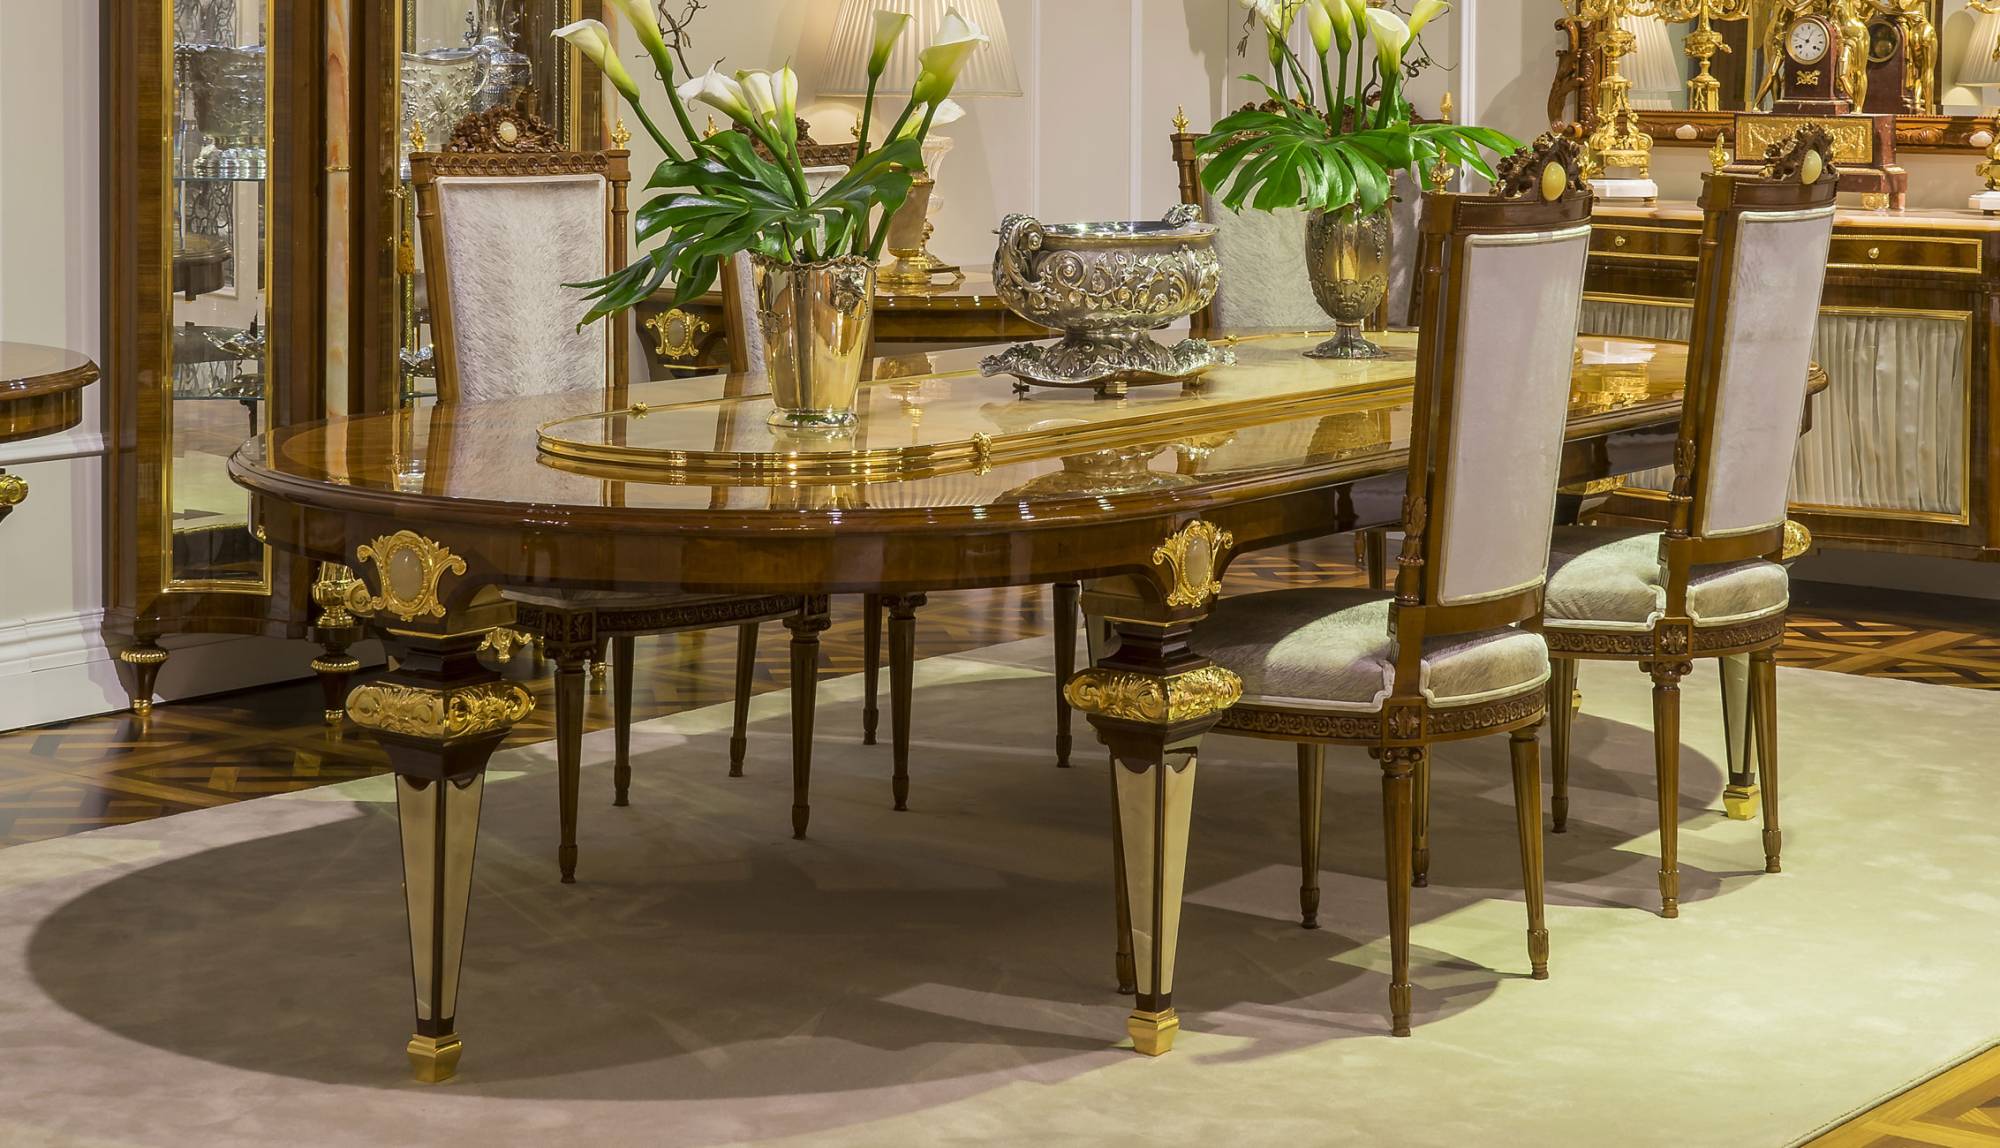 ART. 2070 – C.G. Capelletti Italian Luxury Classic Tables. Made in Italy classic interior design